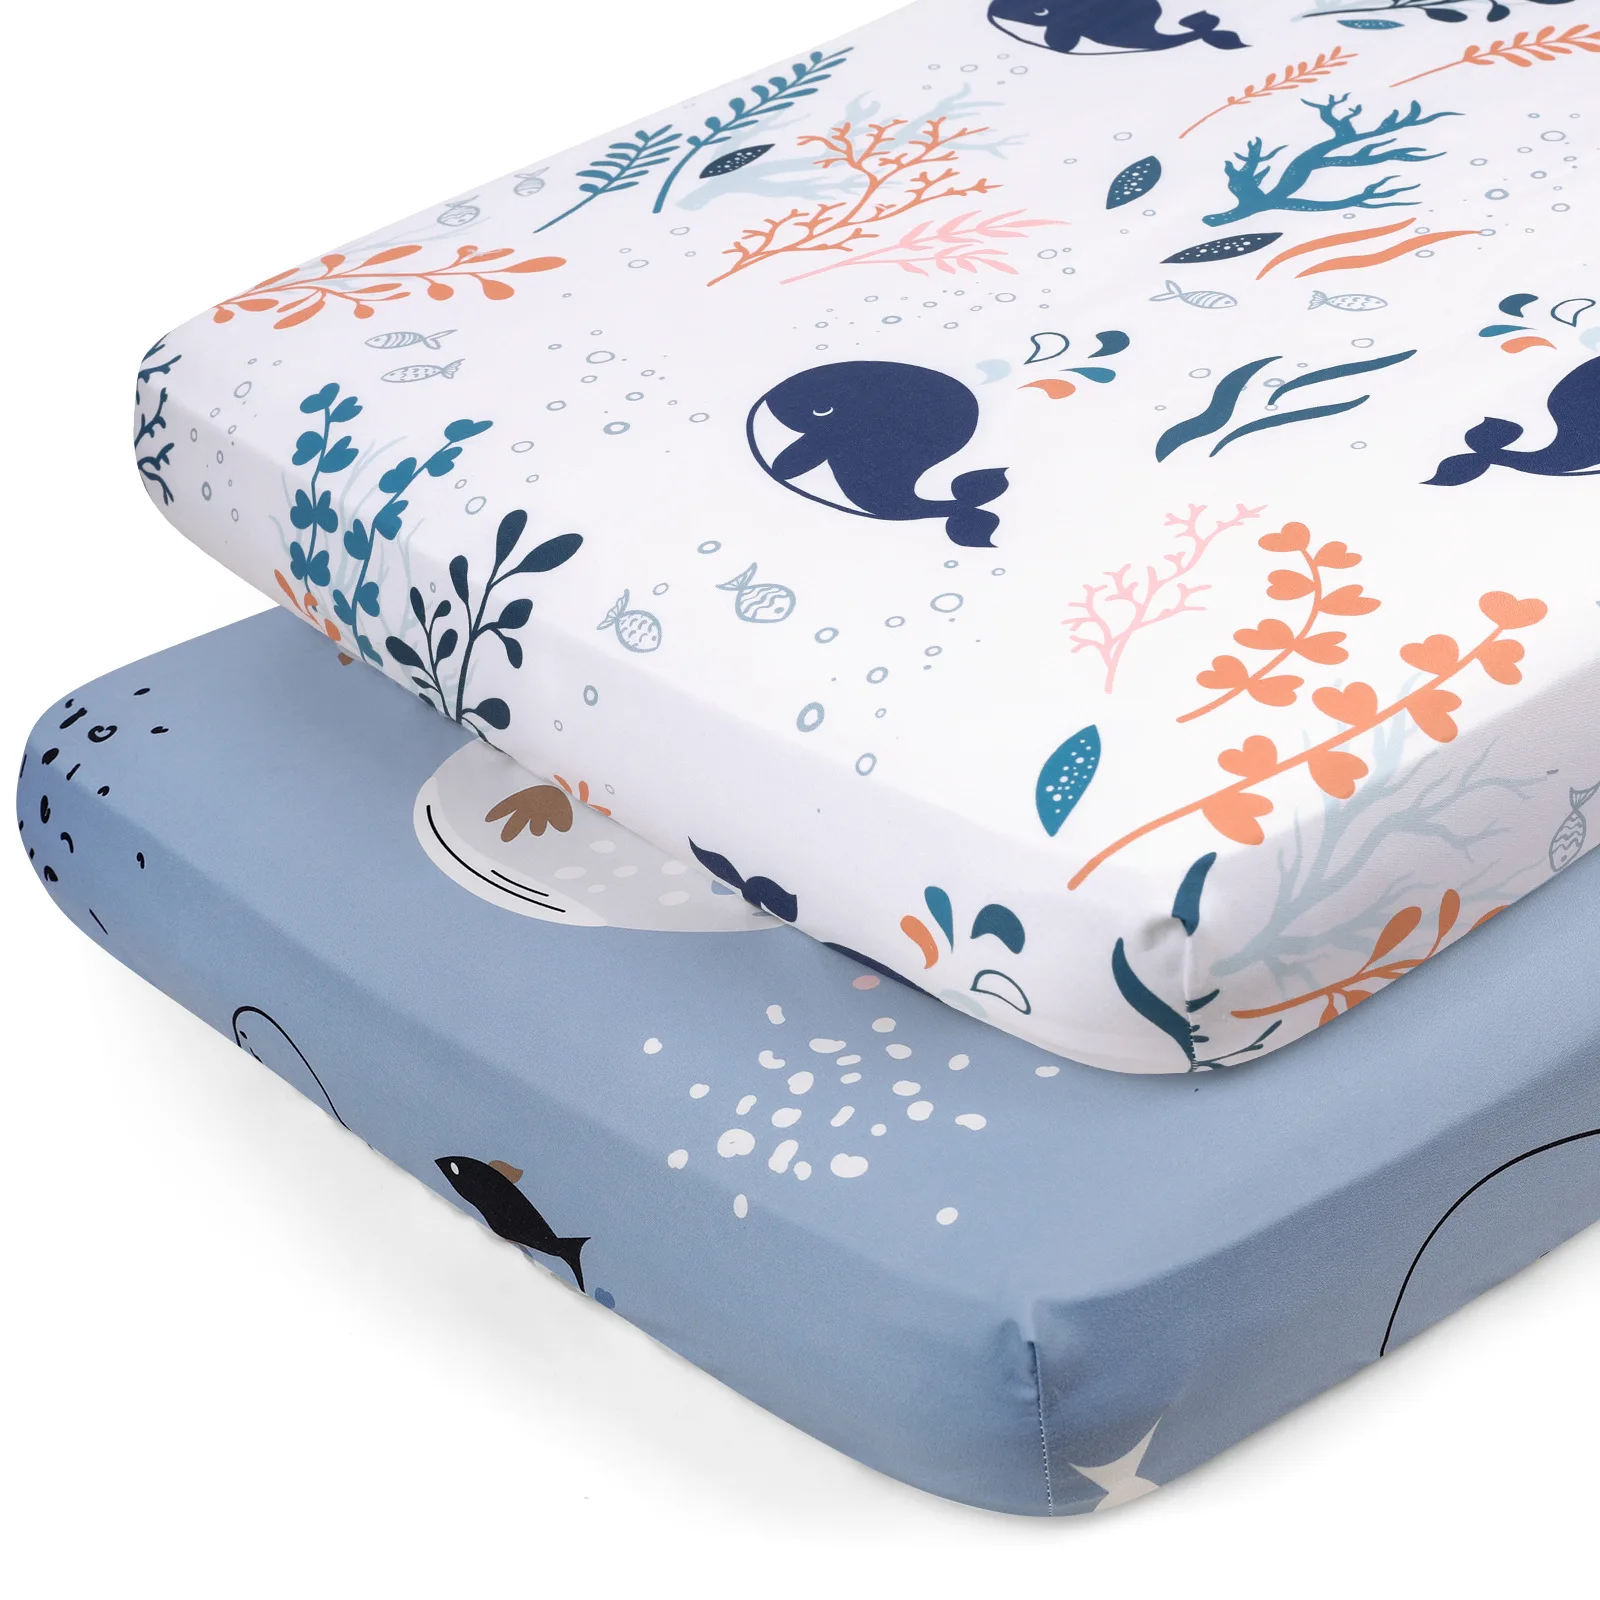 Baby Crib Sheet Cotton Bed Cover Printed Sheet Children Playard Bedding Newborn Changing Pad Cover Bassinet Mattress 82*41cm